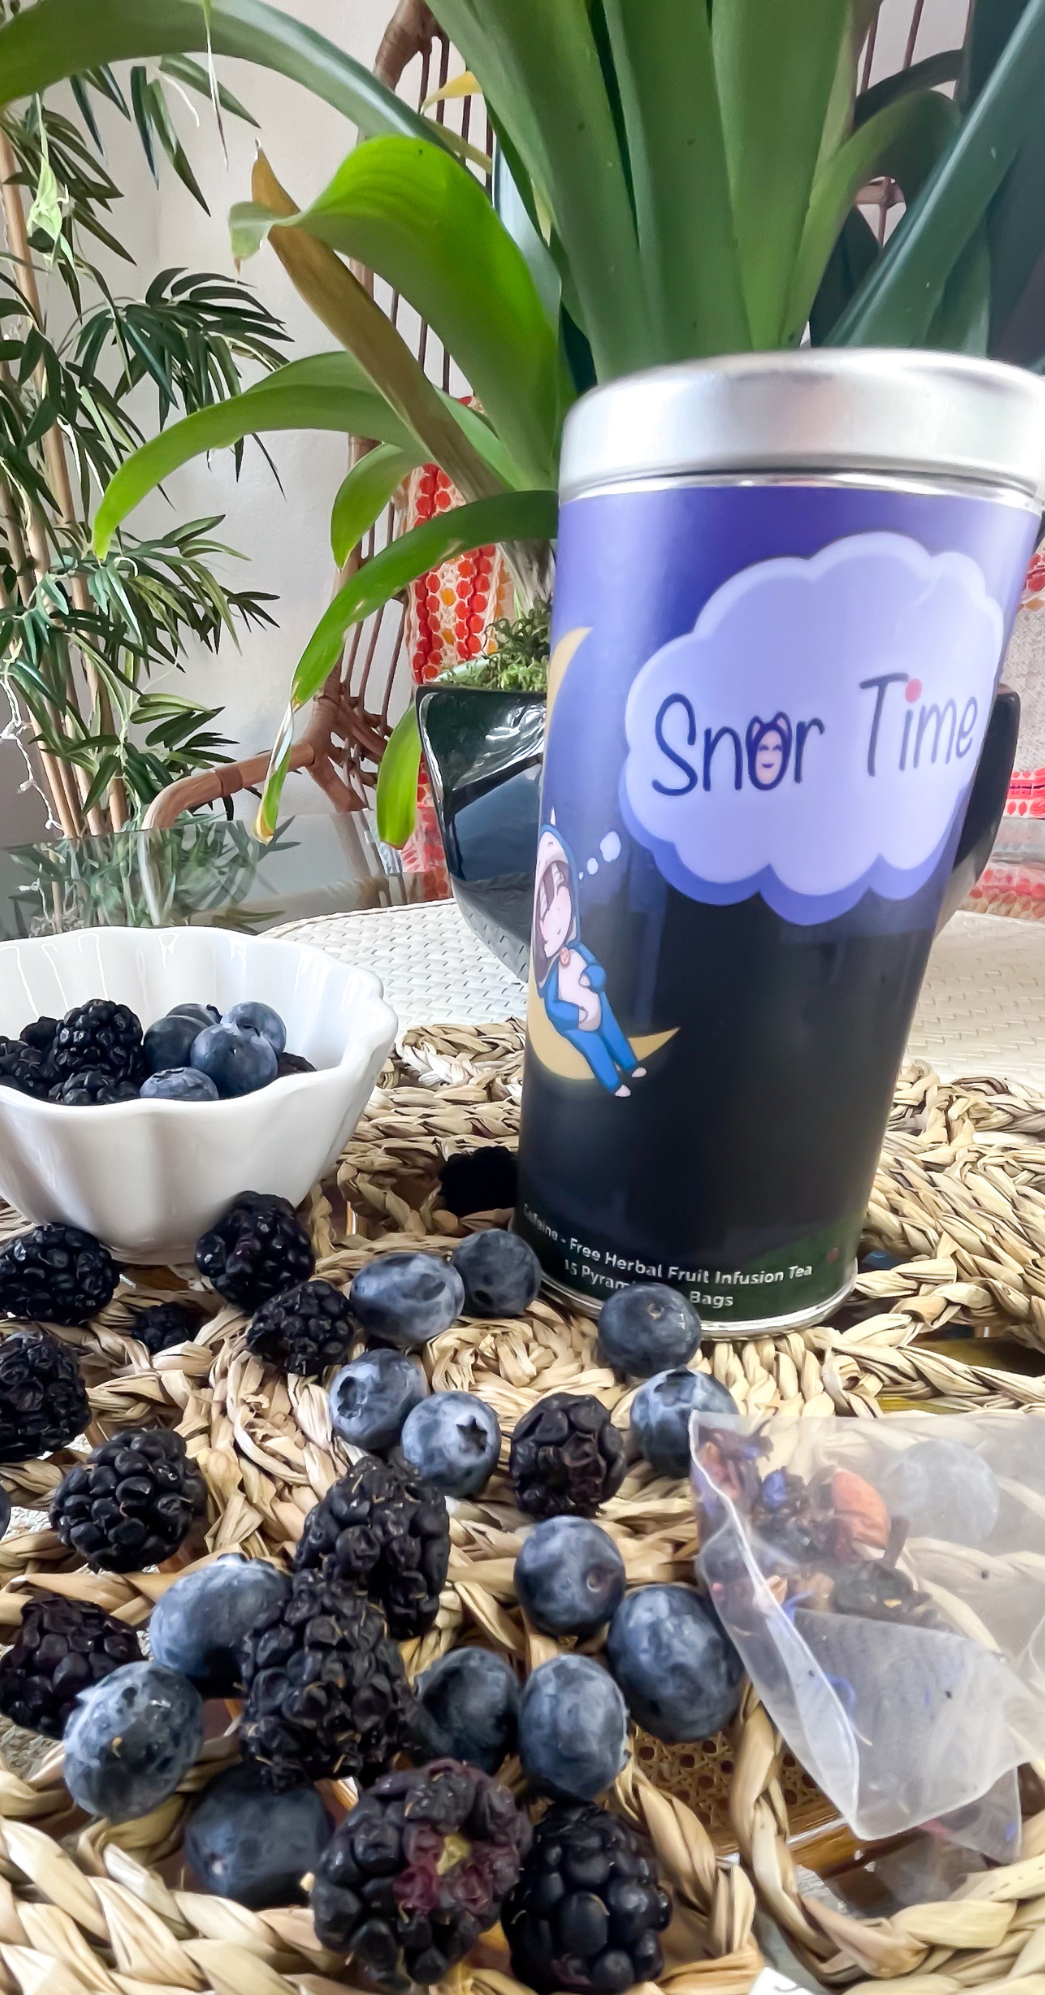 Snor Time Caffeine - Free Herbal Fruit Infusion Tea